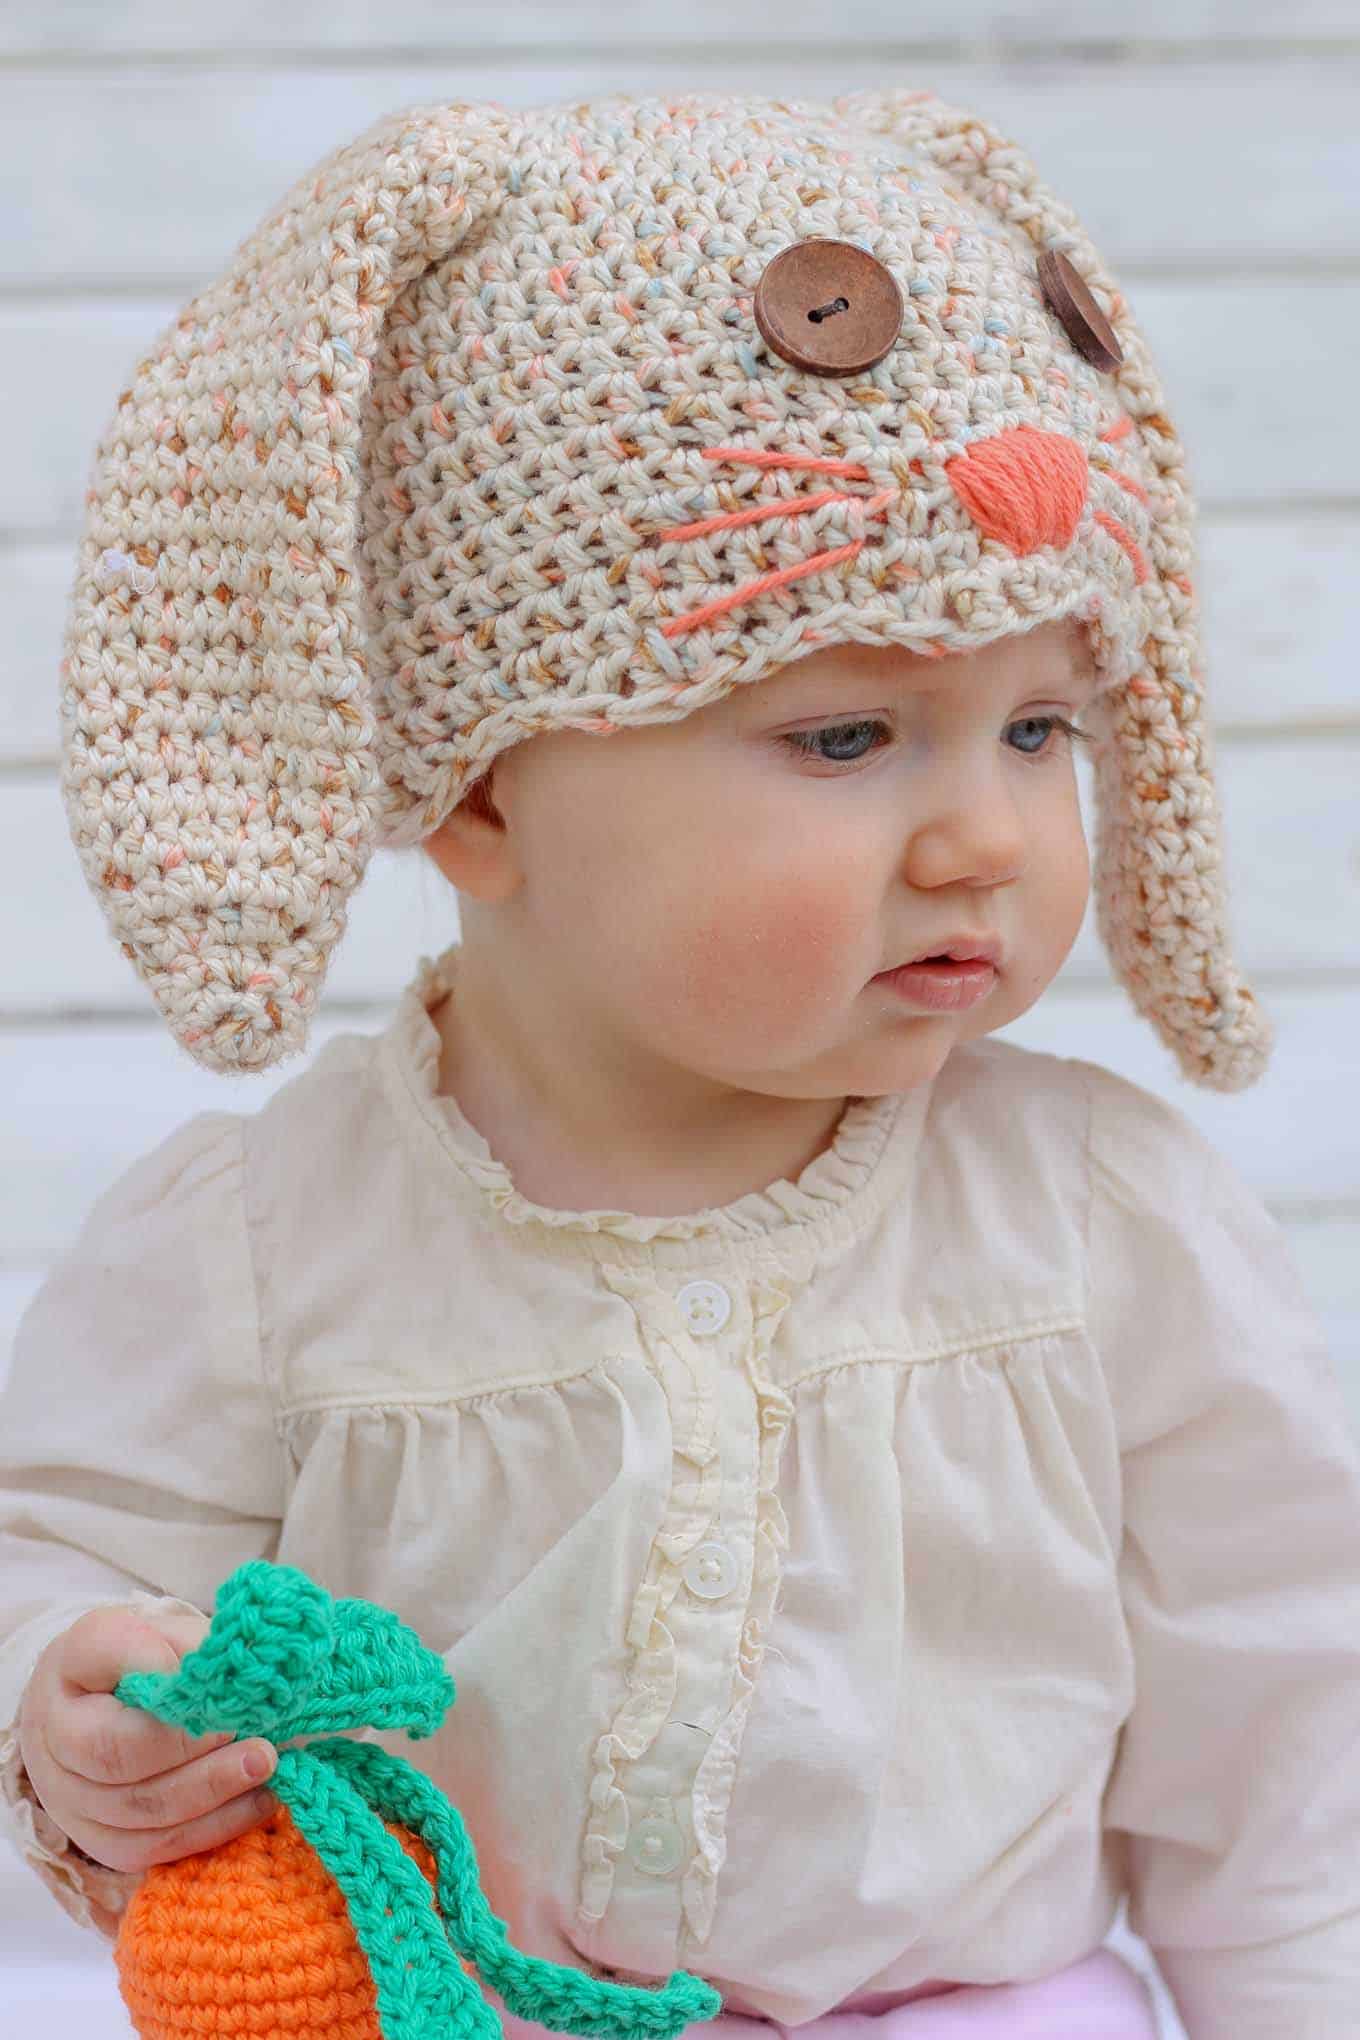 15 novel crocheted children's autumn hats